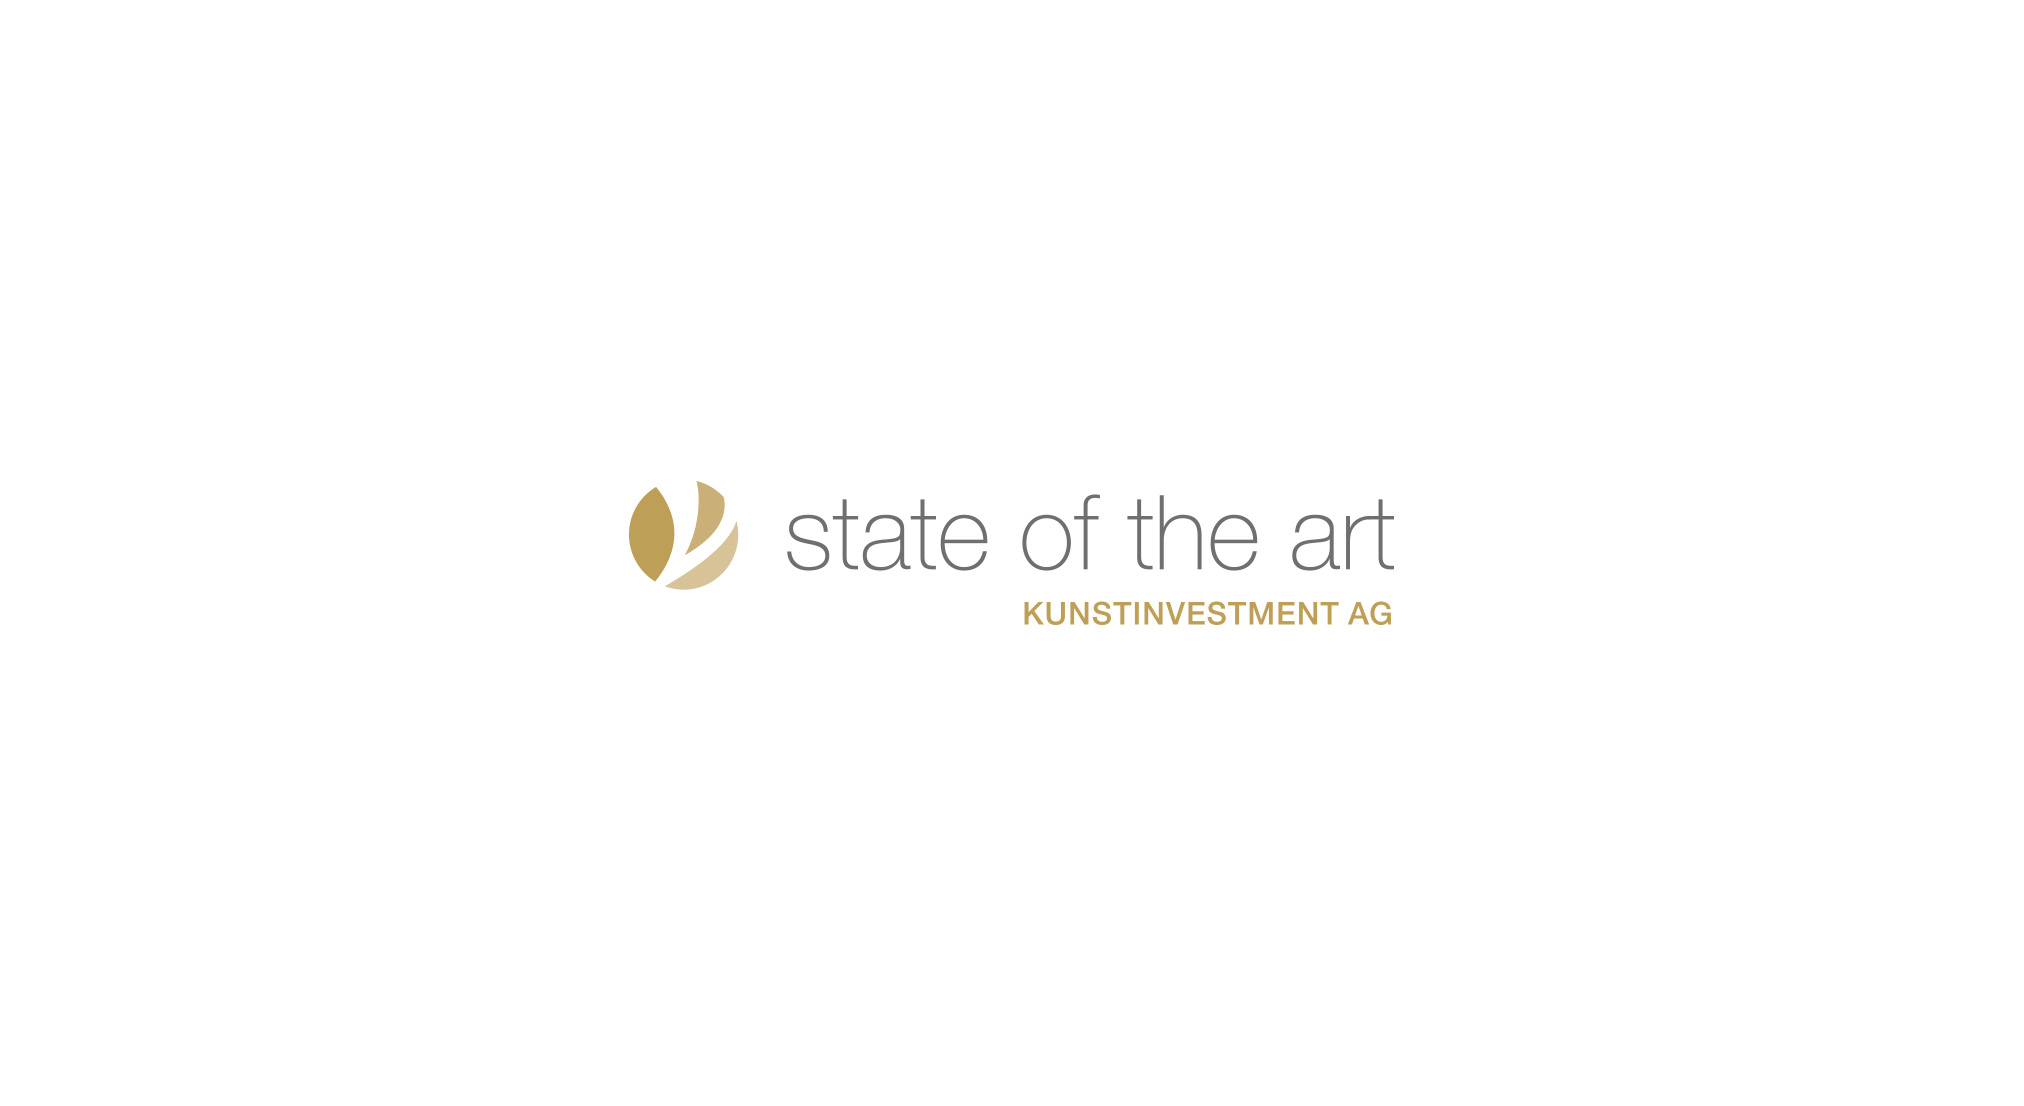 State of the art Kunstinvestment